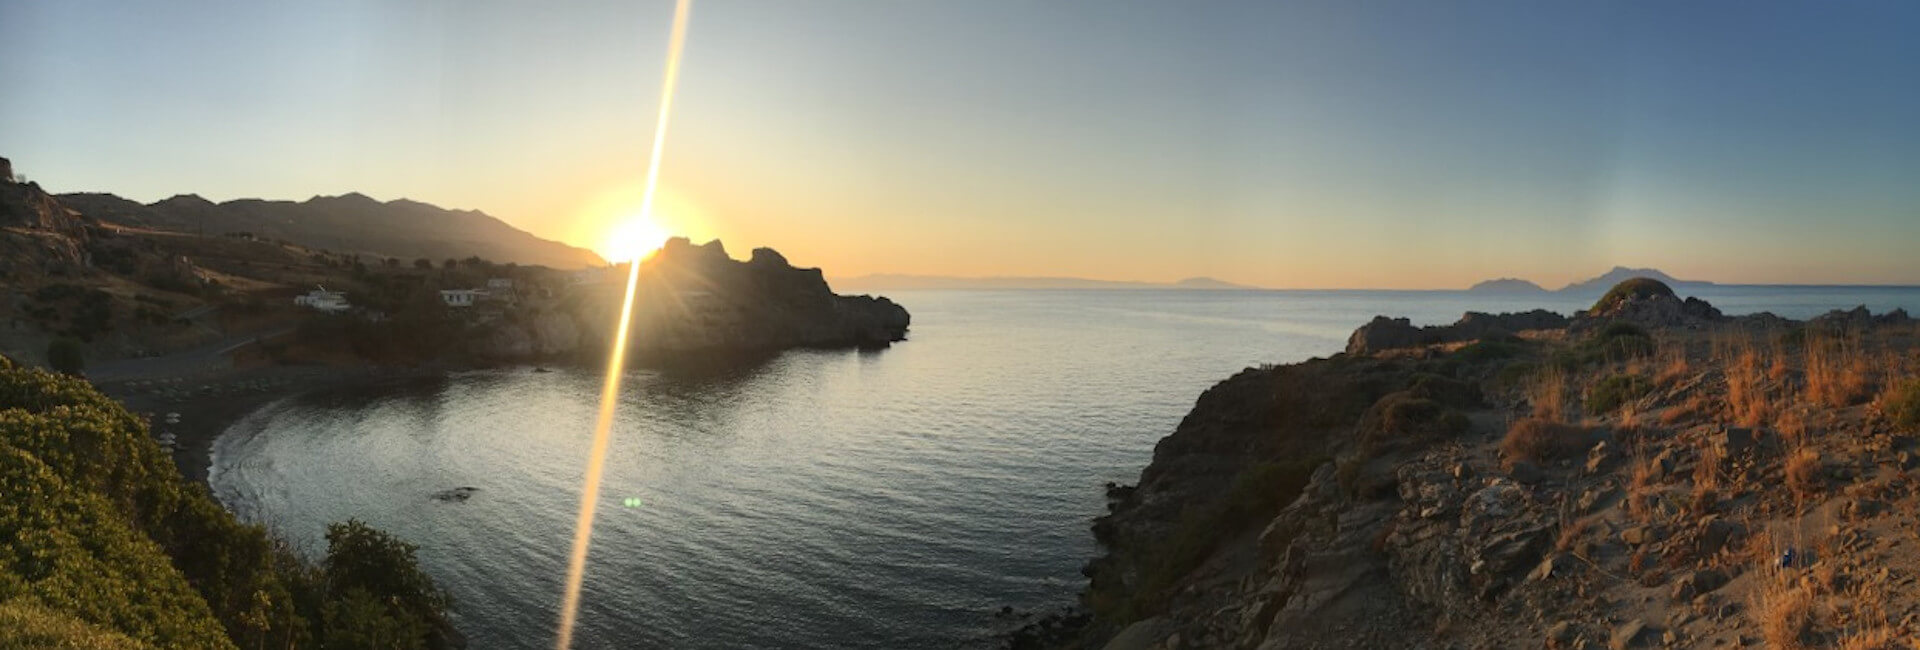 Dawn rising over Agios Pavlos bay by Yoga Rocks retreat Crete